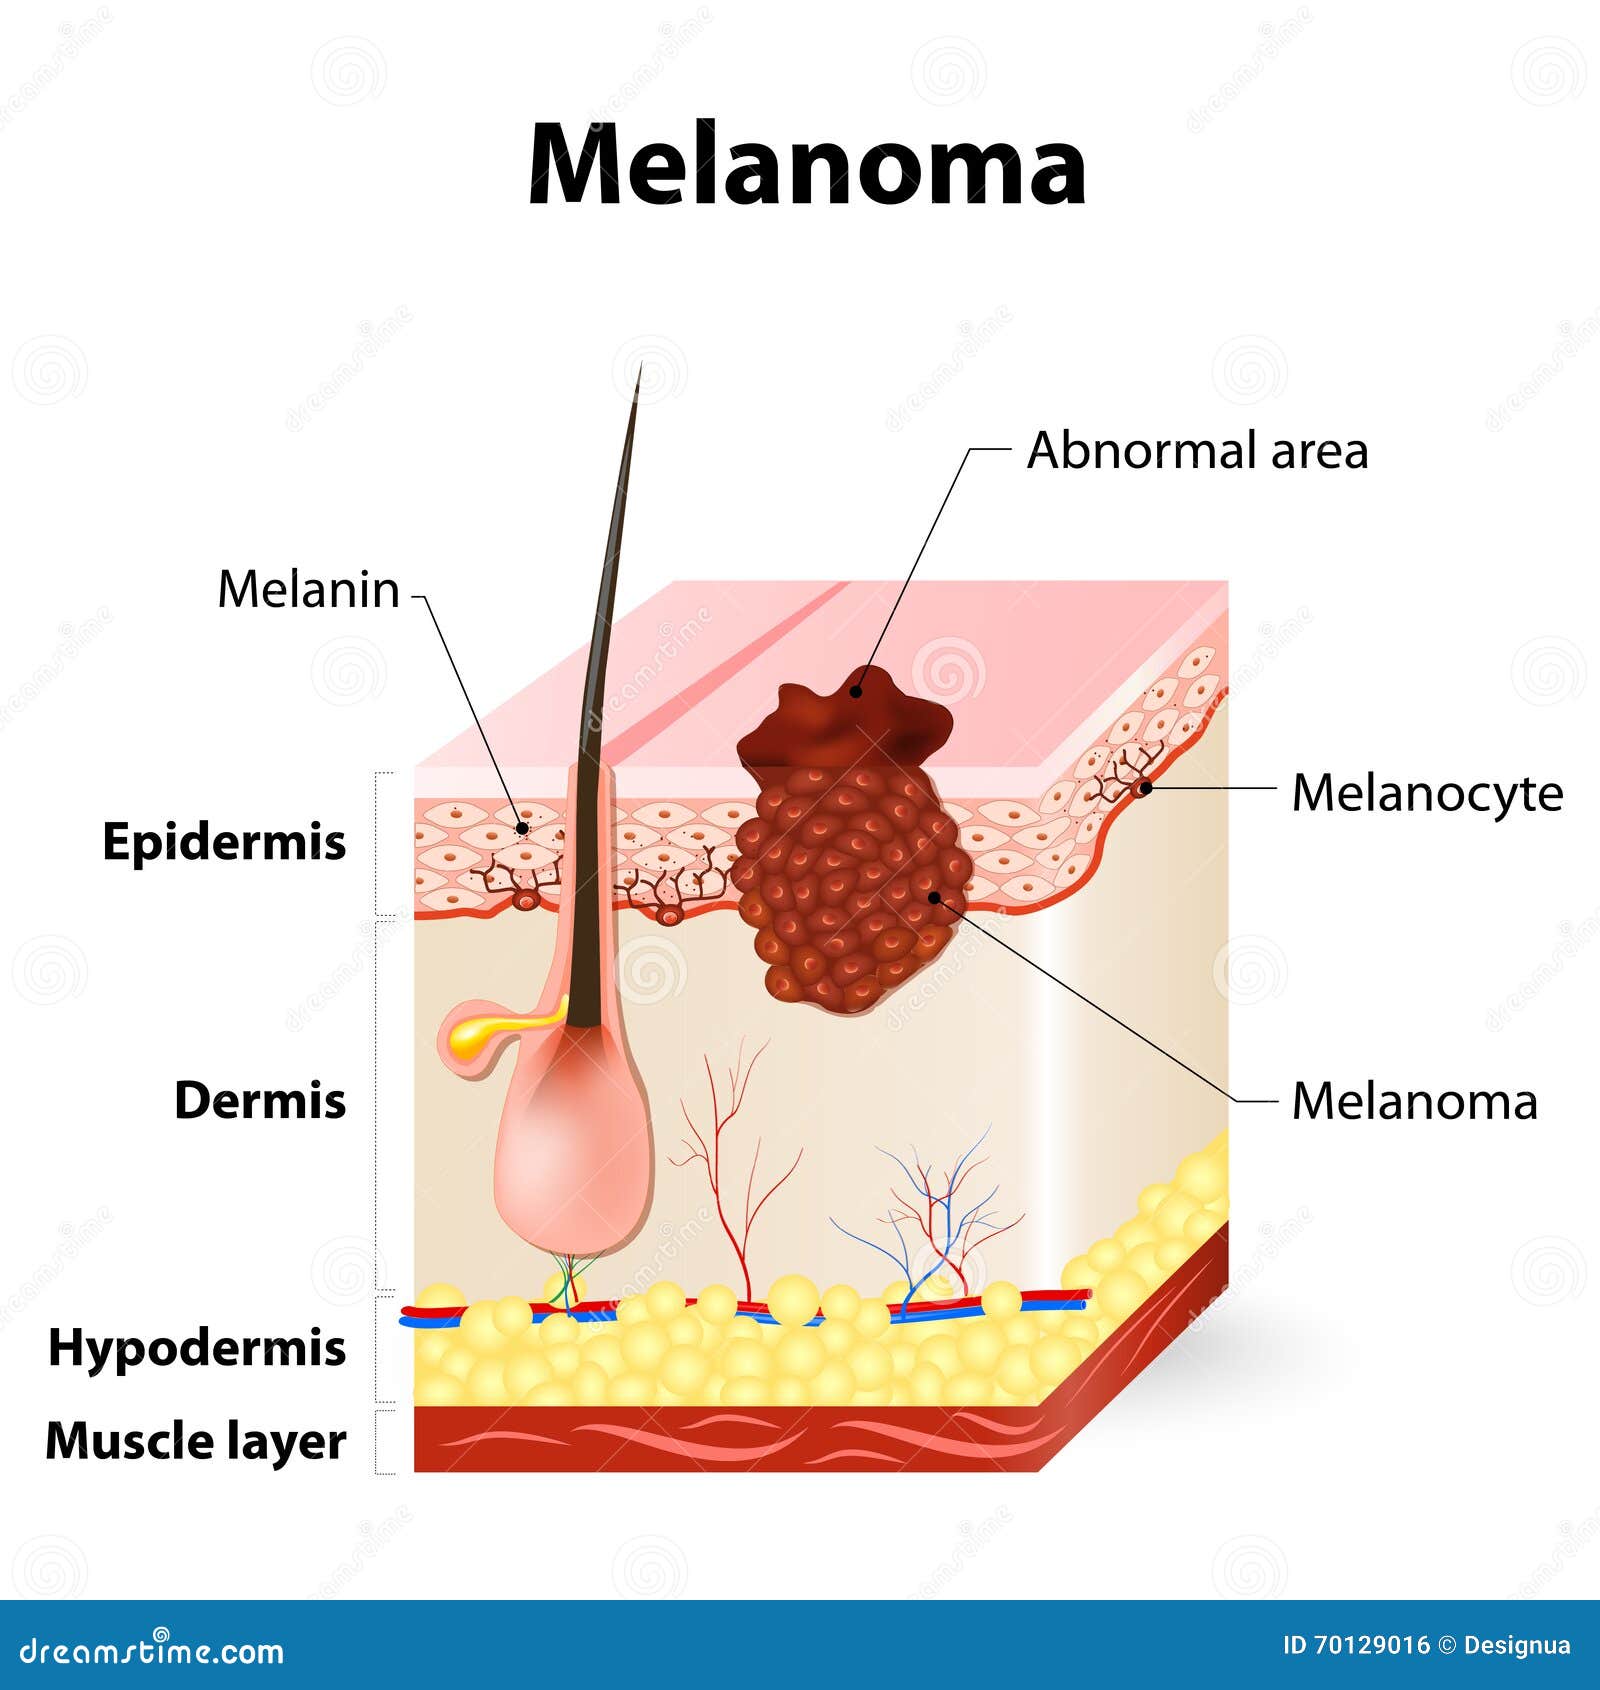 Basal cell skin cancer: MedlinePlus Medical Encyclopedia